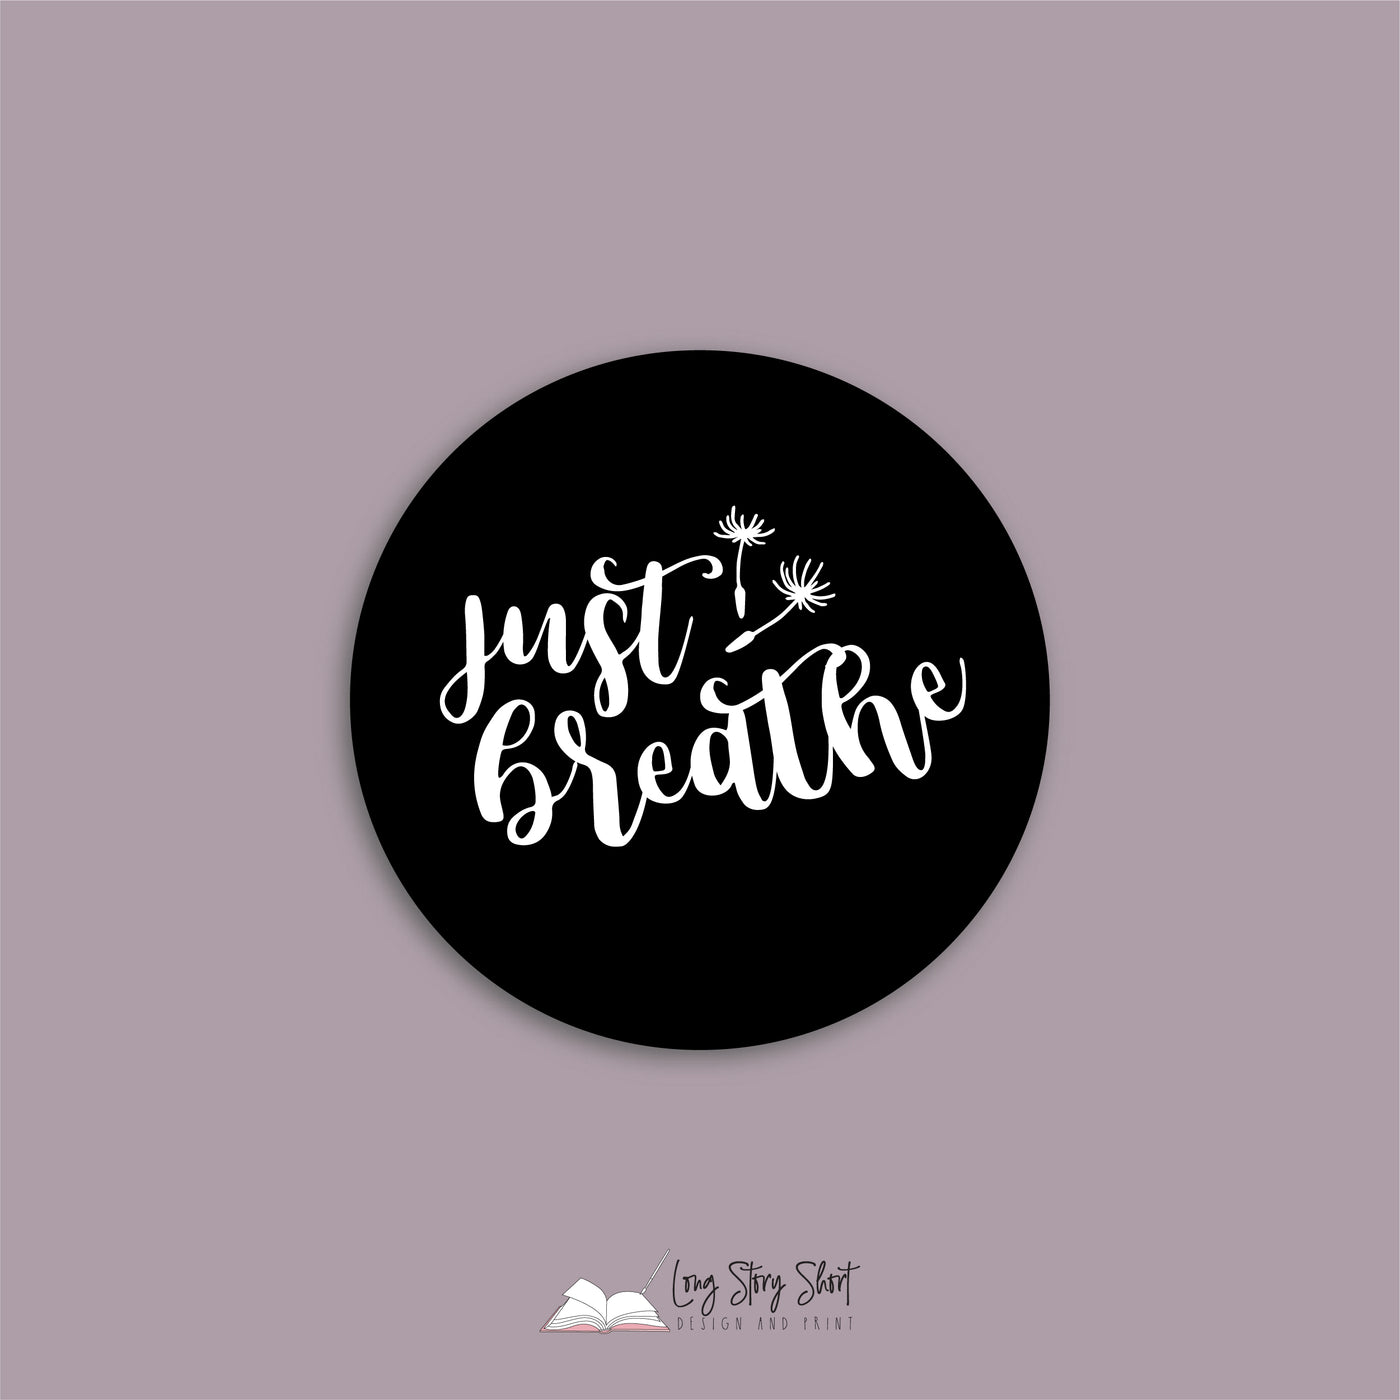 Just breathe Black Vinyl Label Pack